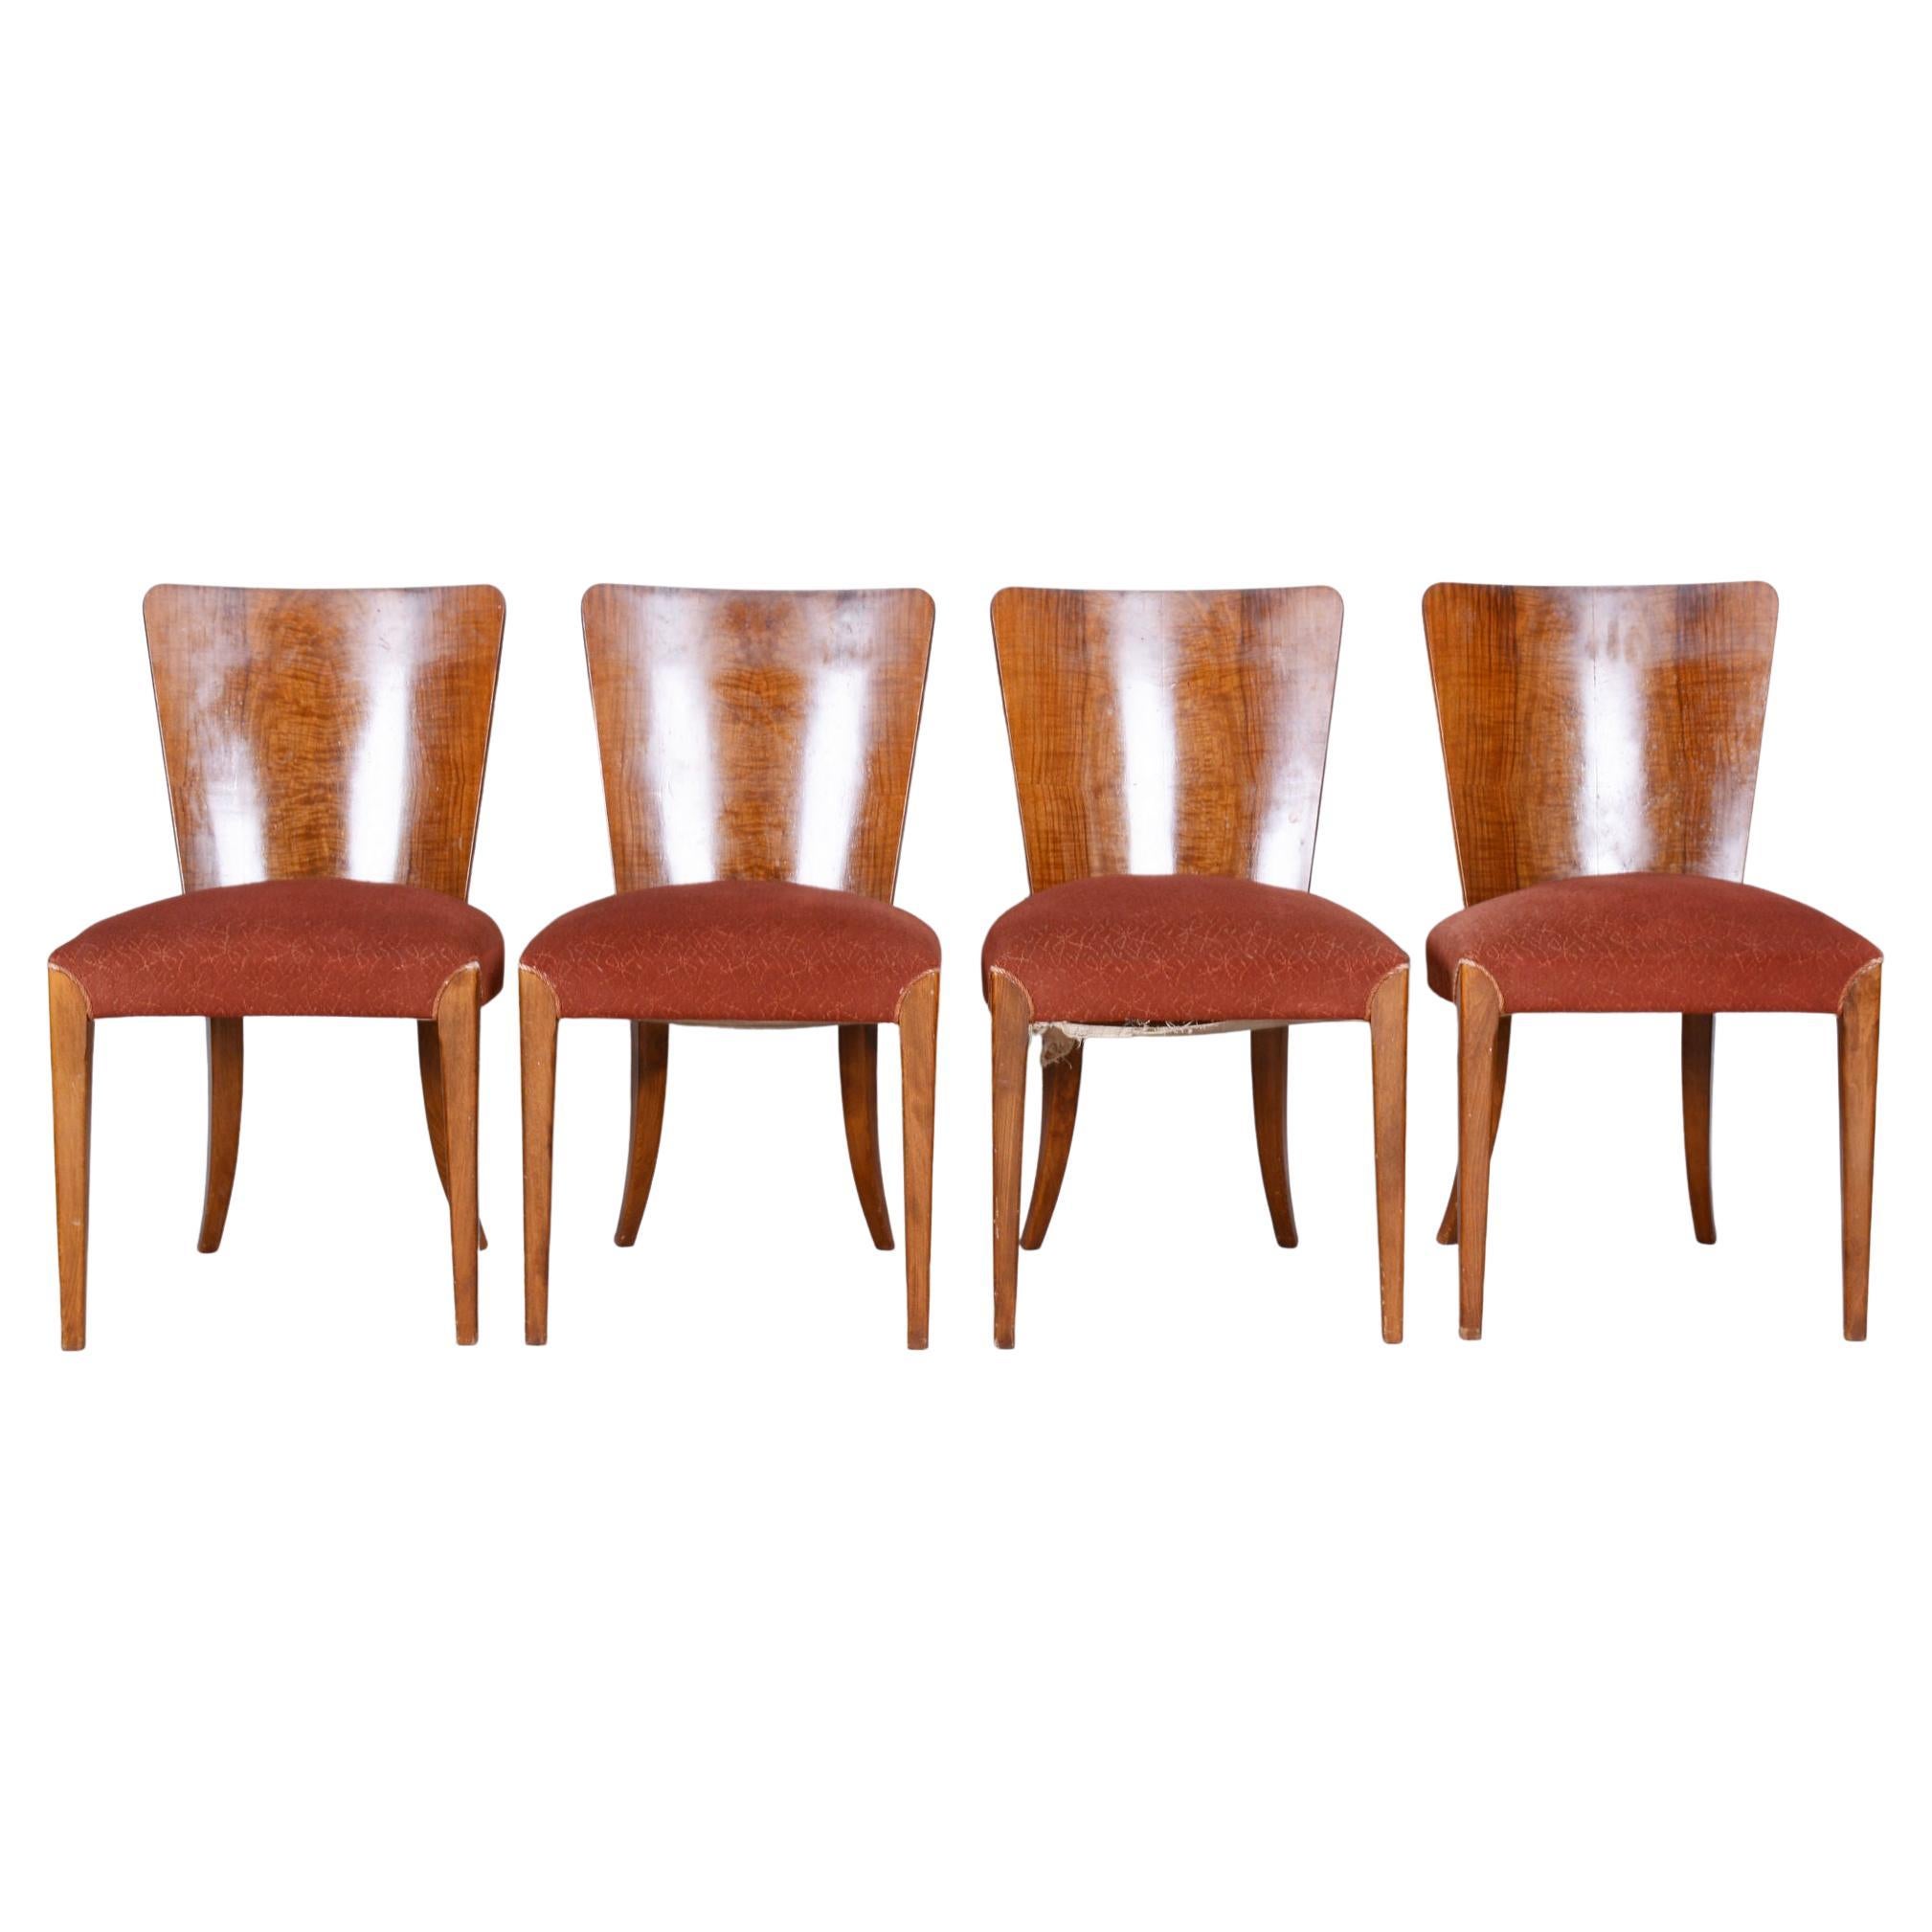 Set of Four Original ArtDeco Beech Chairs, Halabala, UP Zavody, Czechia, 1940s For Sale